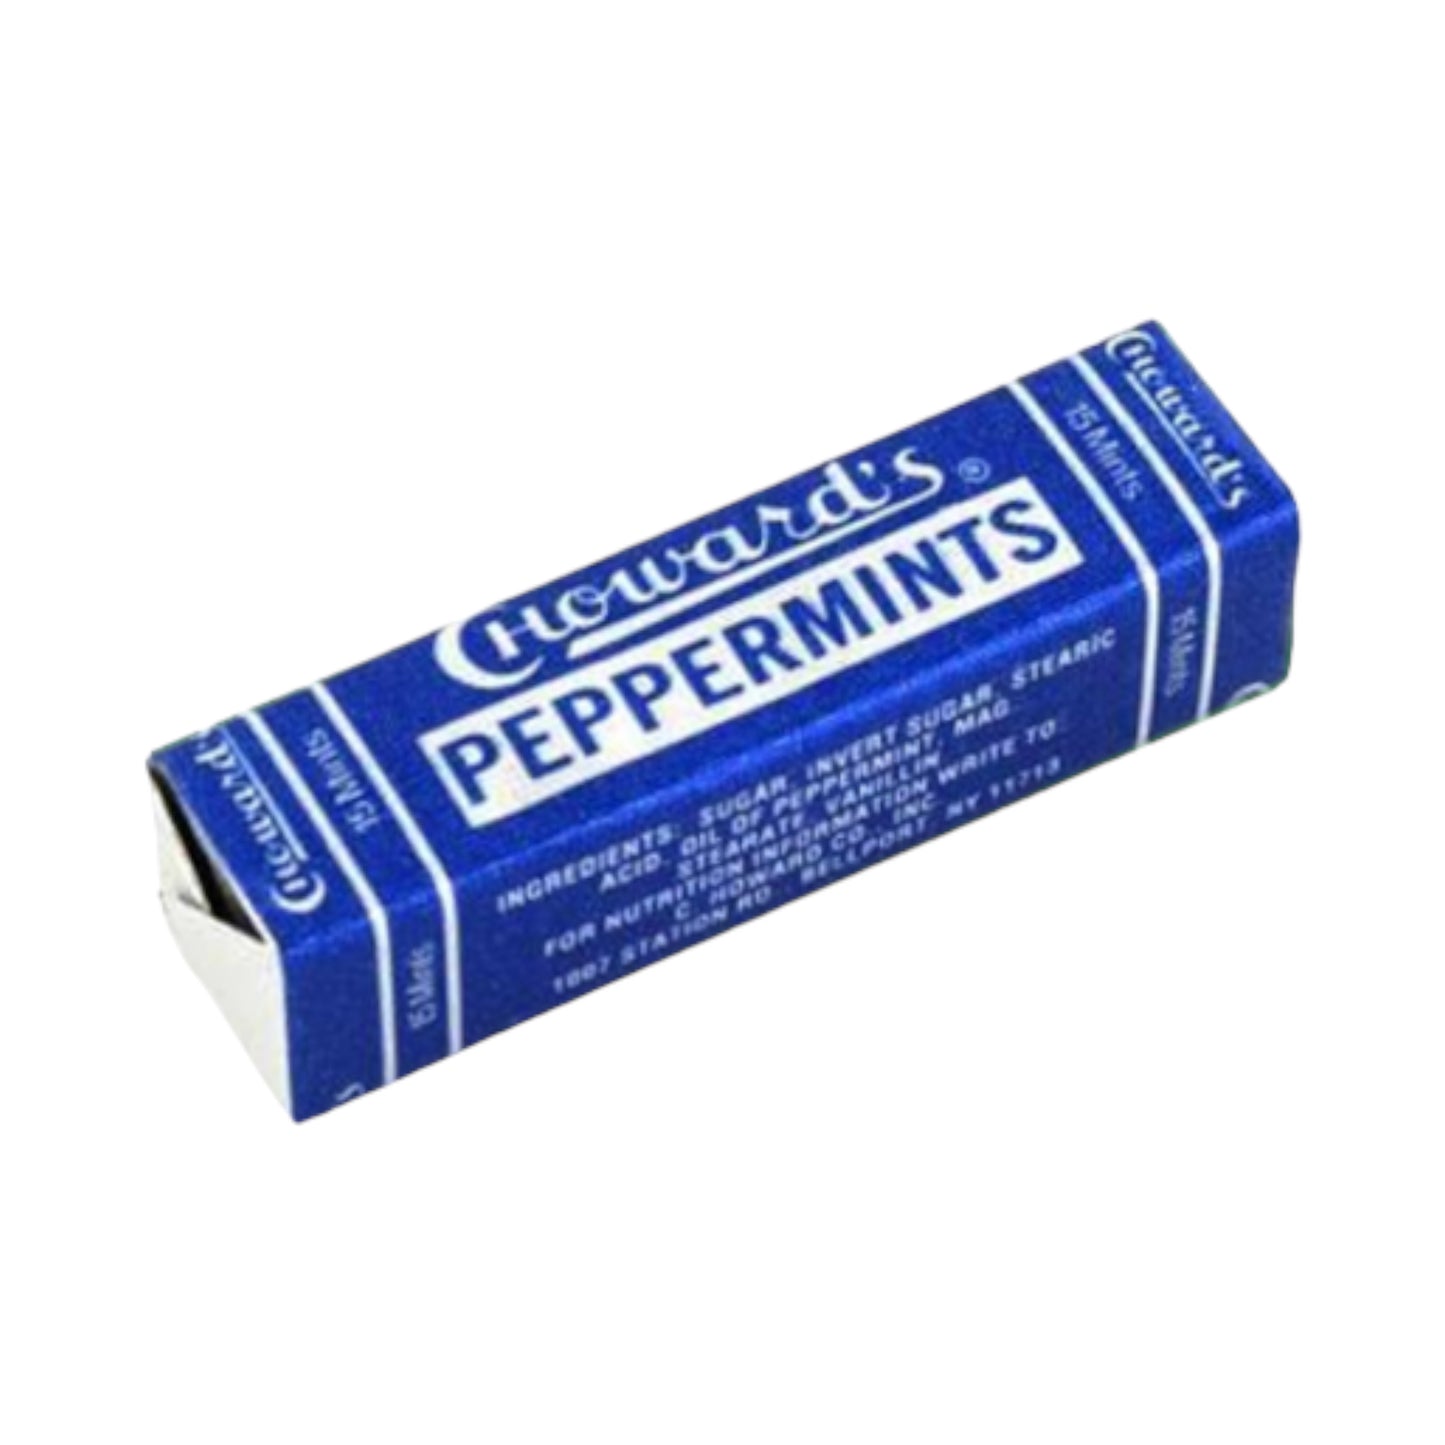 Choward's Peppermints - 15-Piece